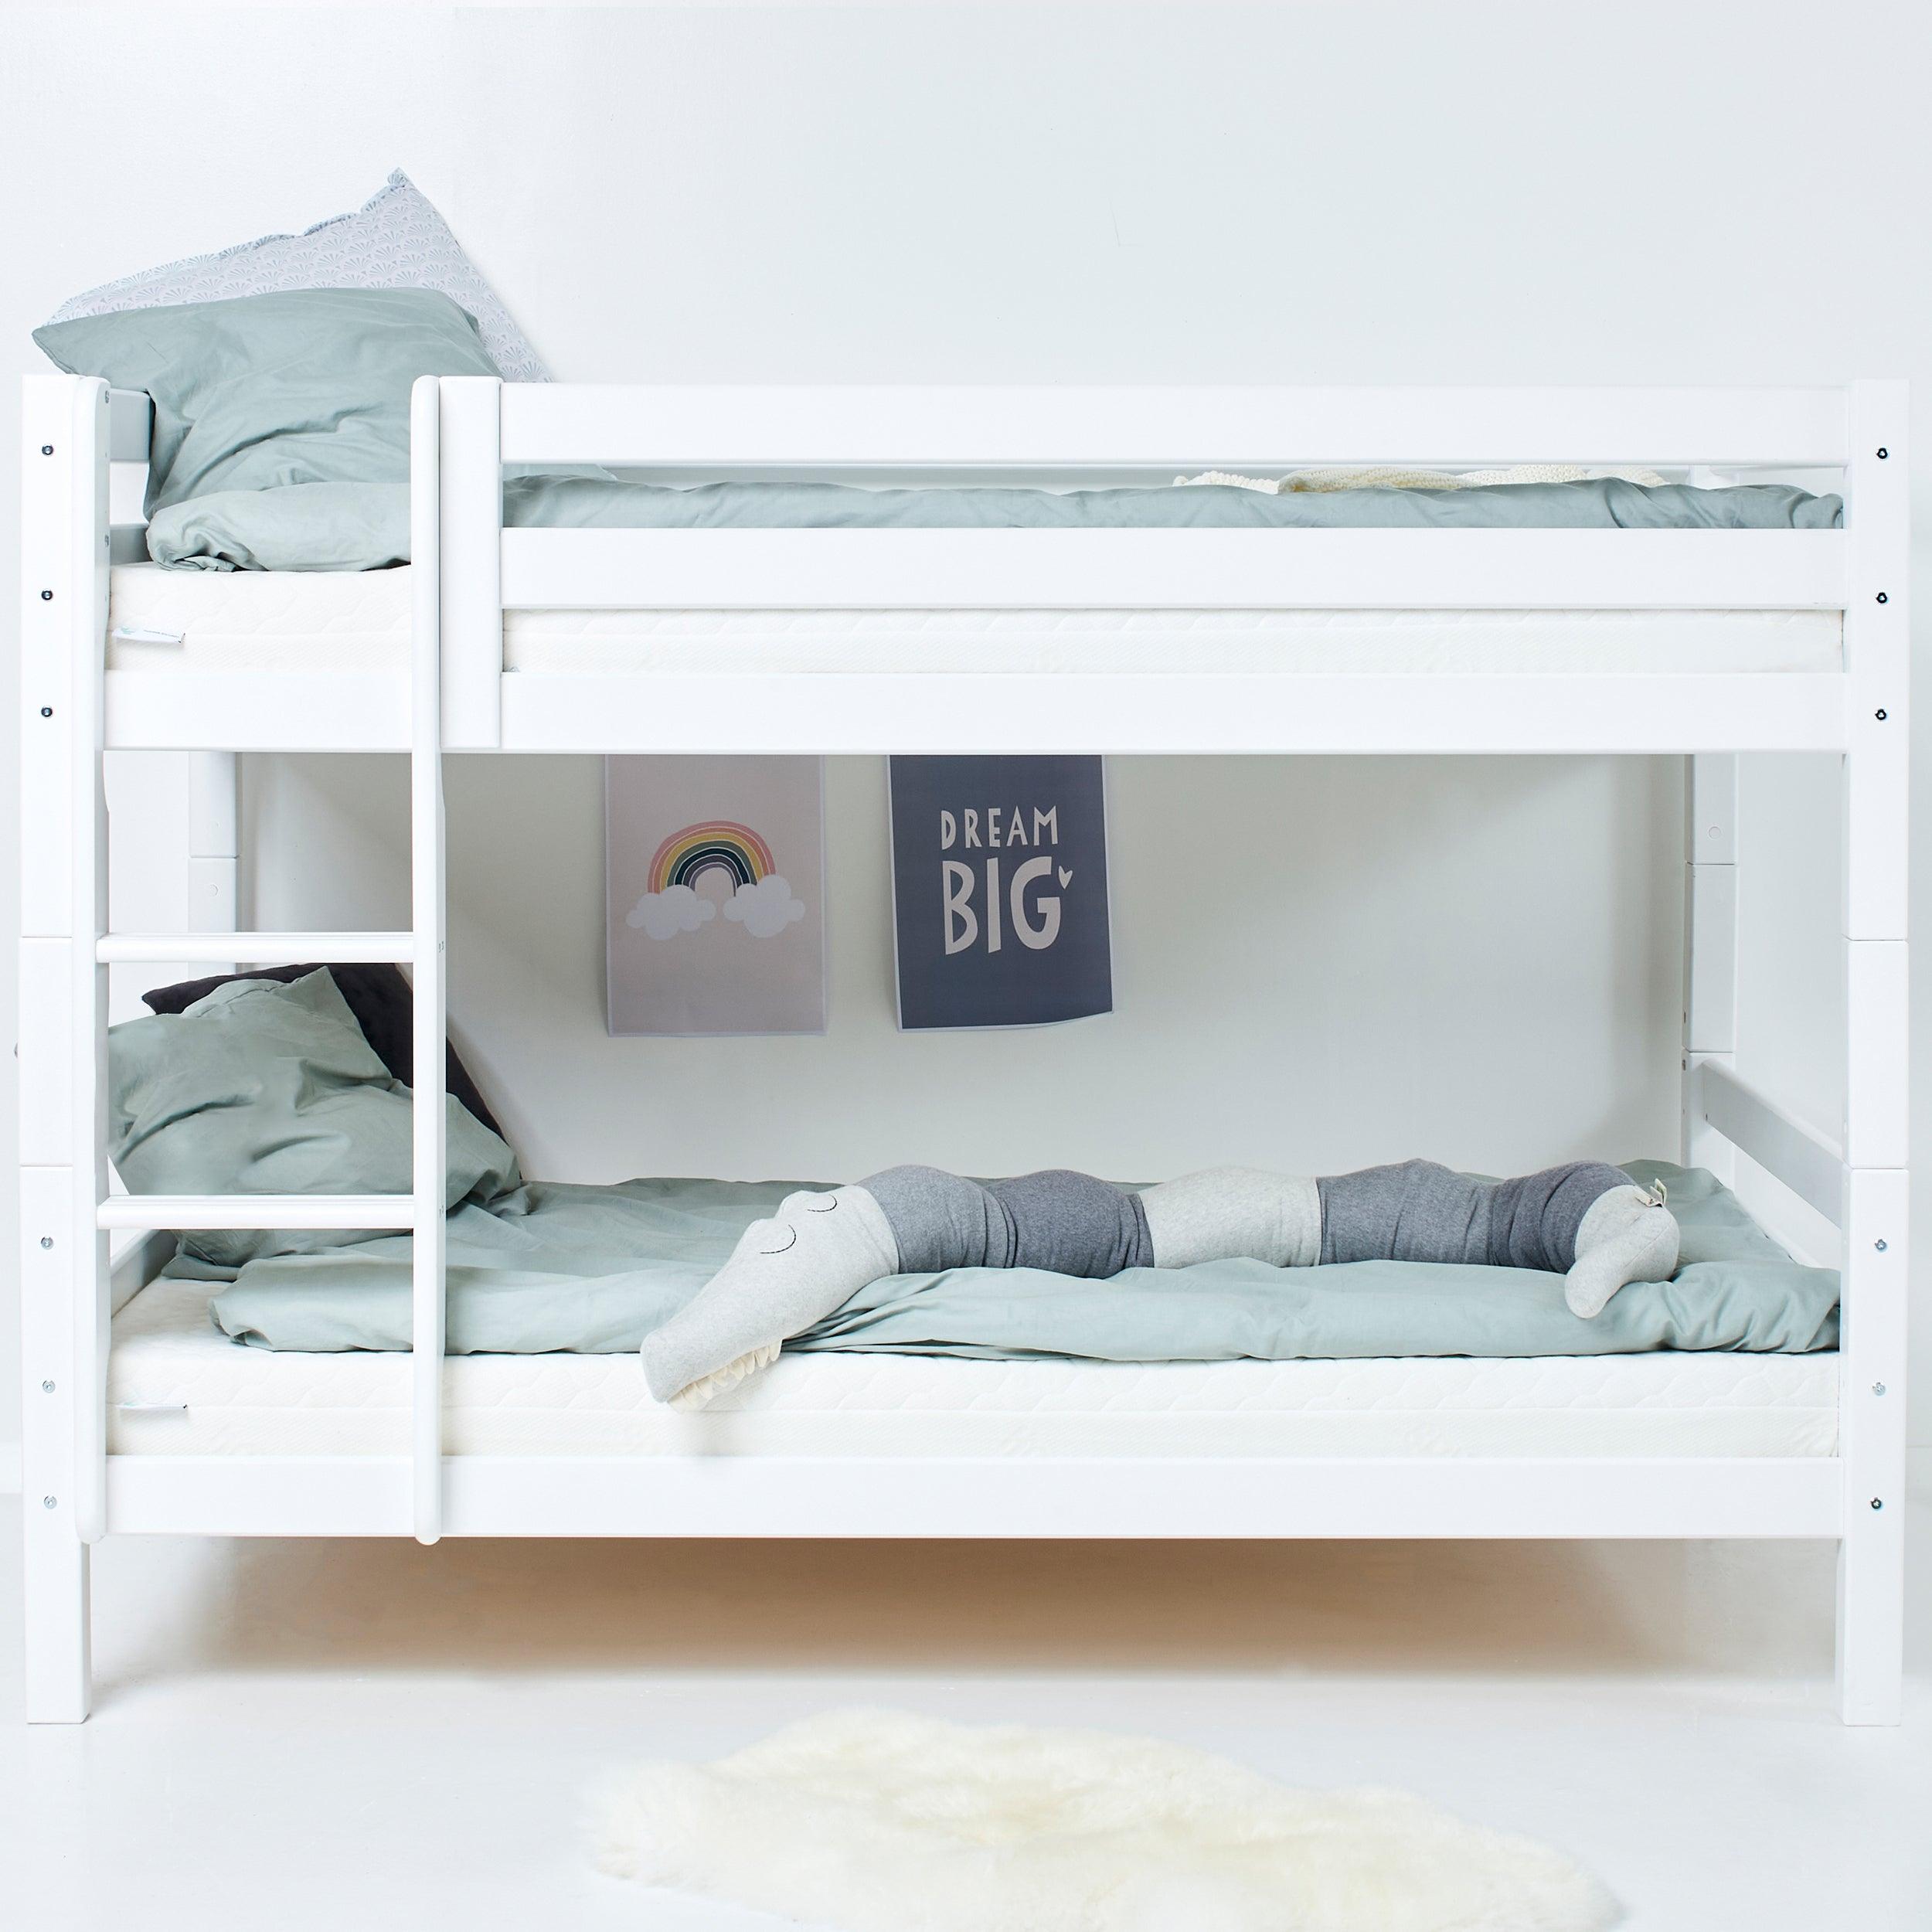 Hoppekids ECO Luxury Ladder for Bunk Bed, White